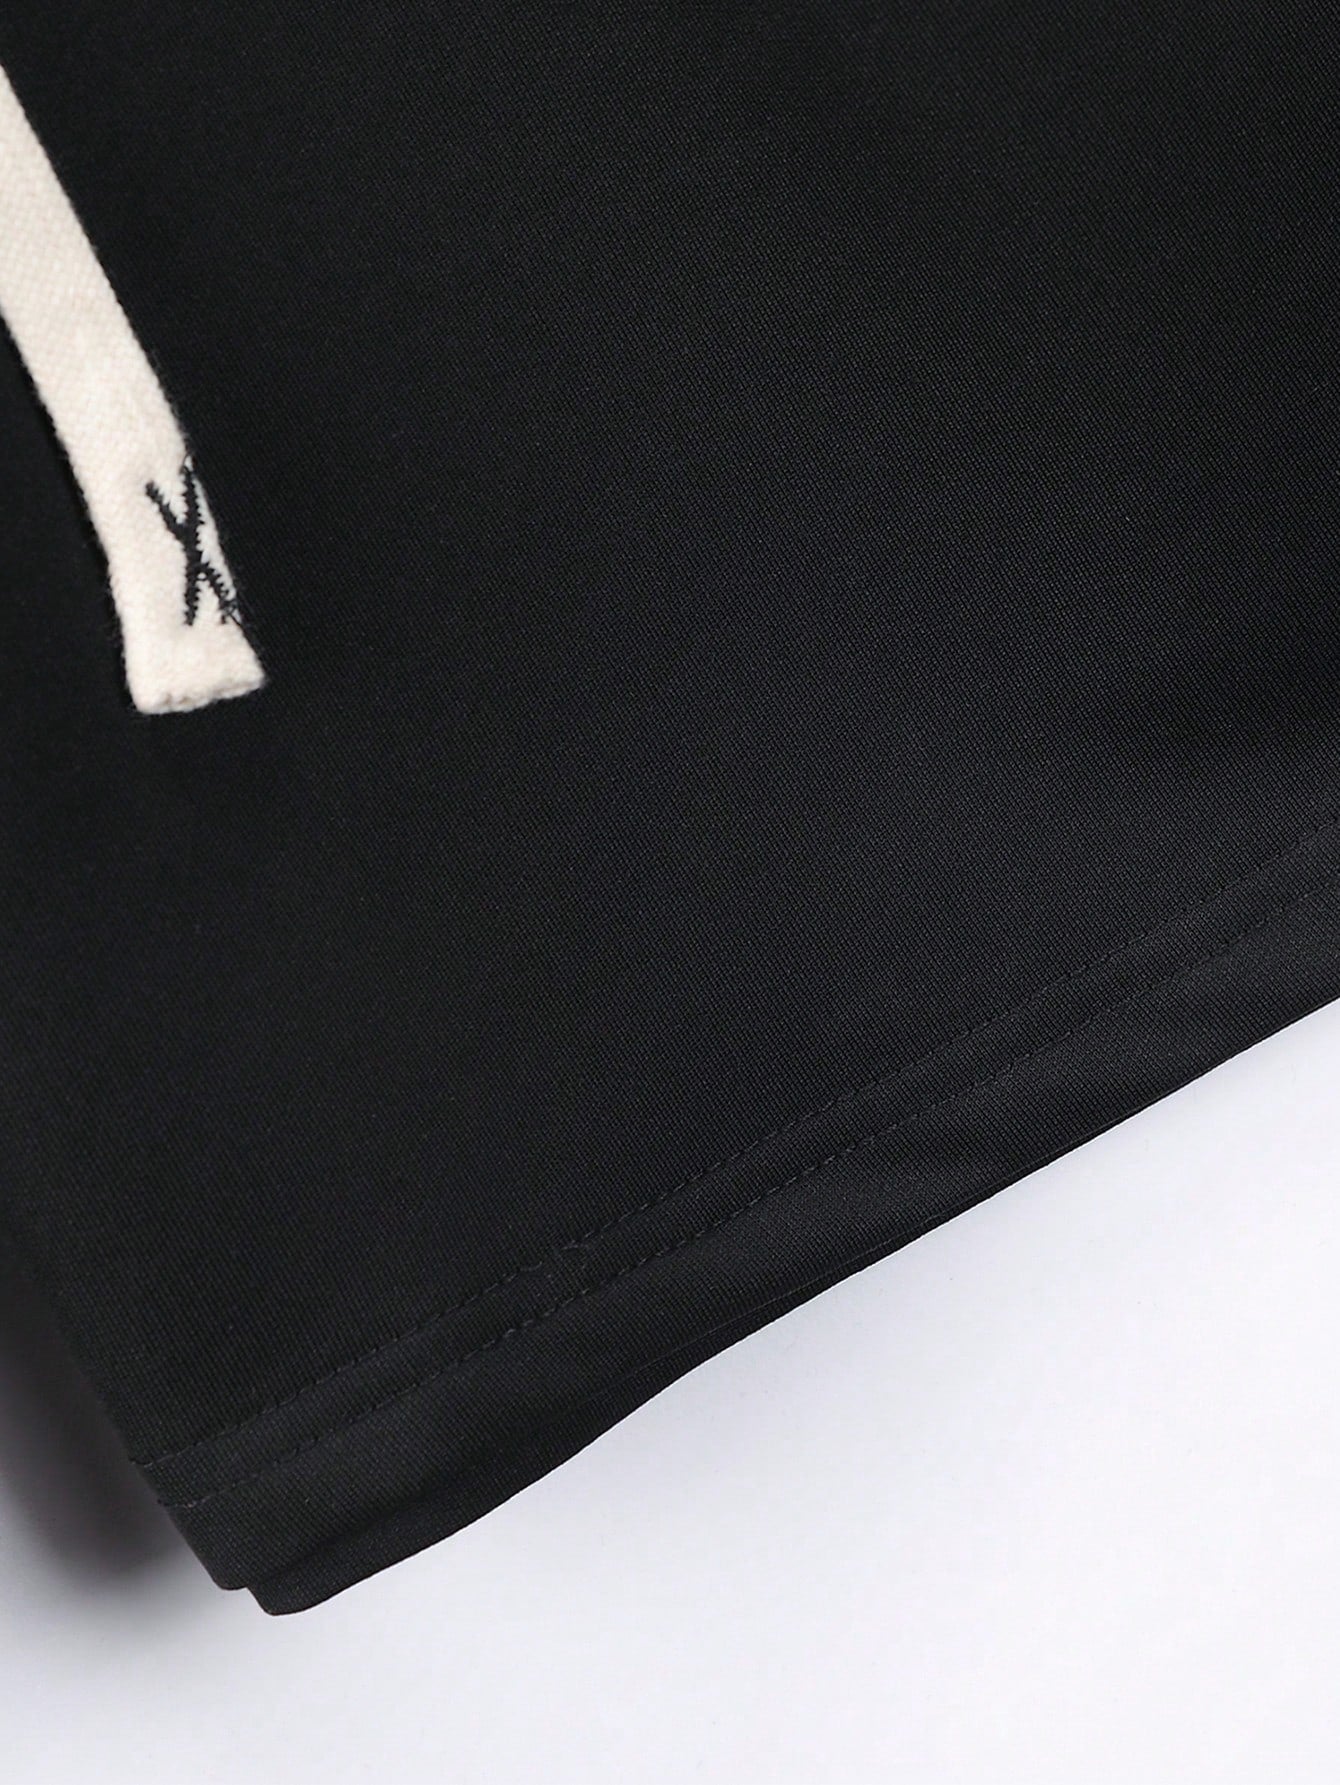 Men's Casual Shorts - Personalized Print, Sports, Travel, Drawstring Waist, Pockets